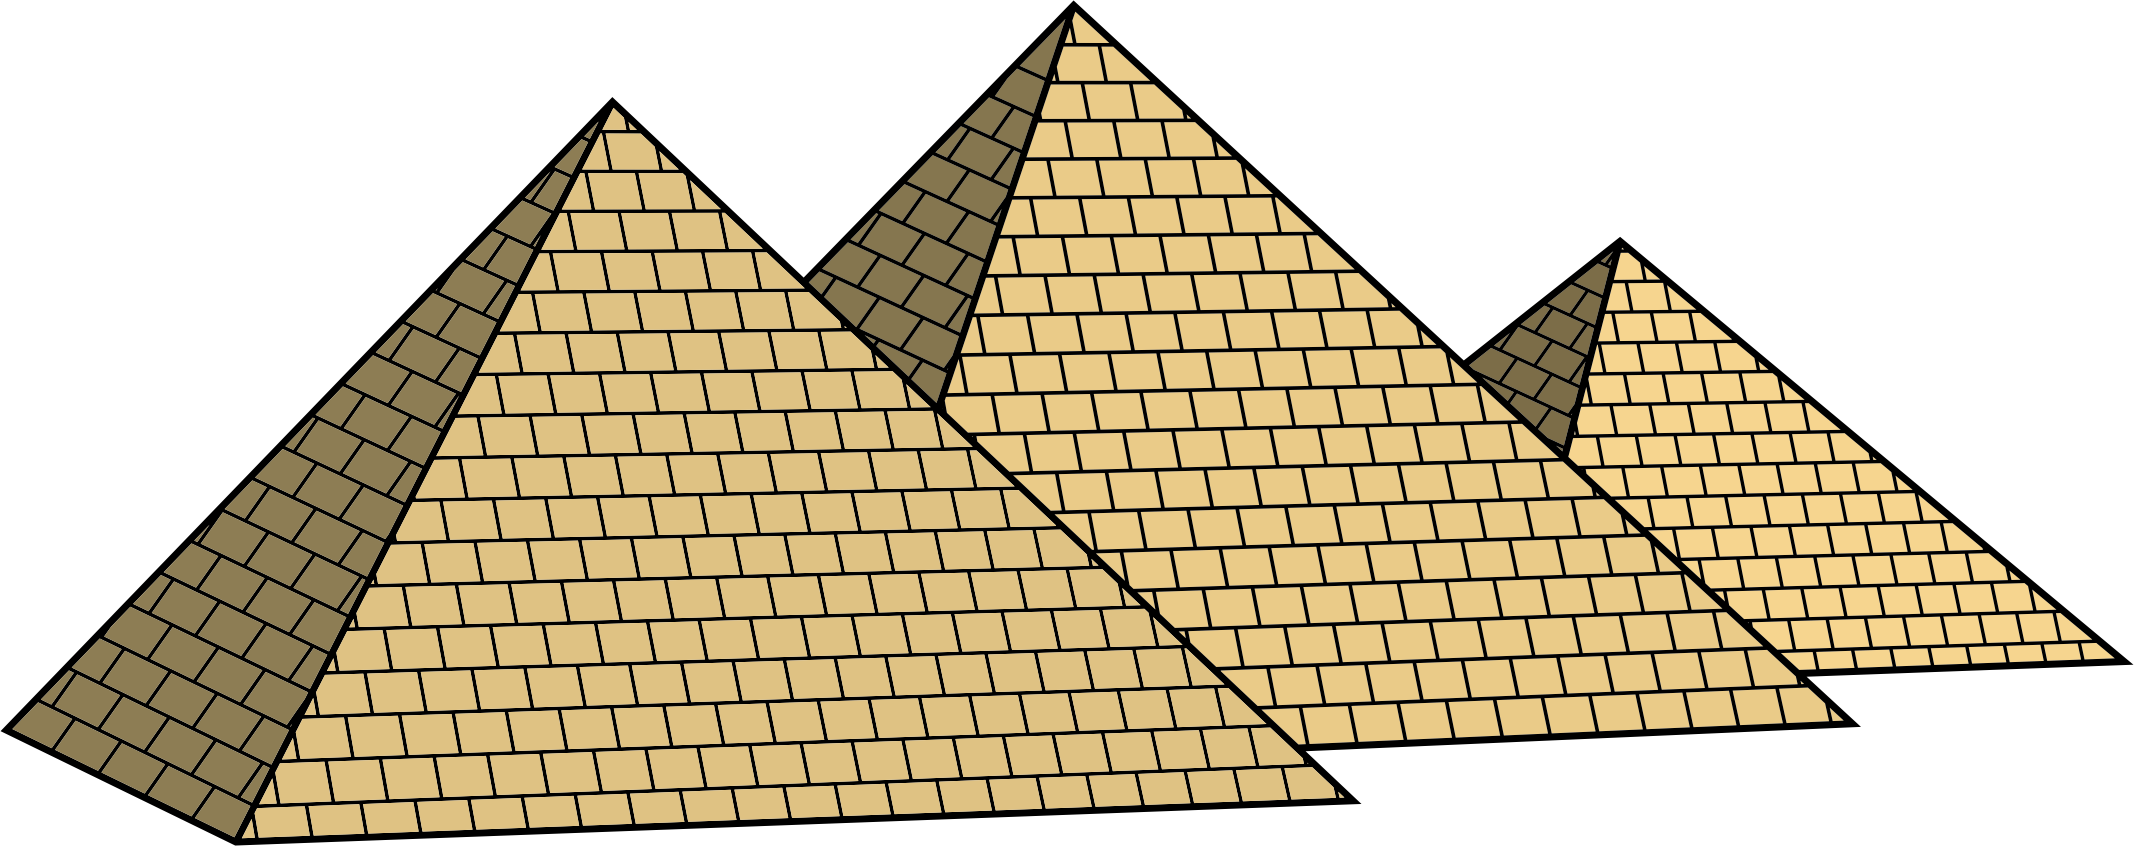 Great Pyramid Of Giza Egyptian Pyramids Ancient Egypt Clip Art